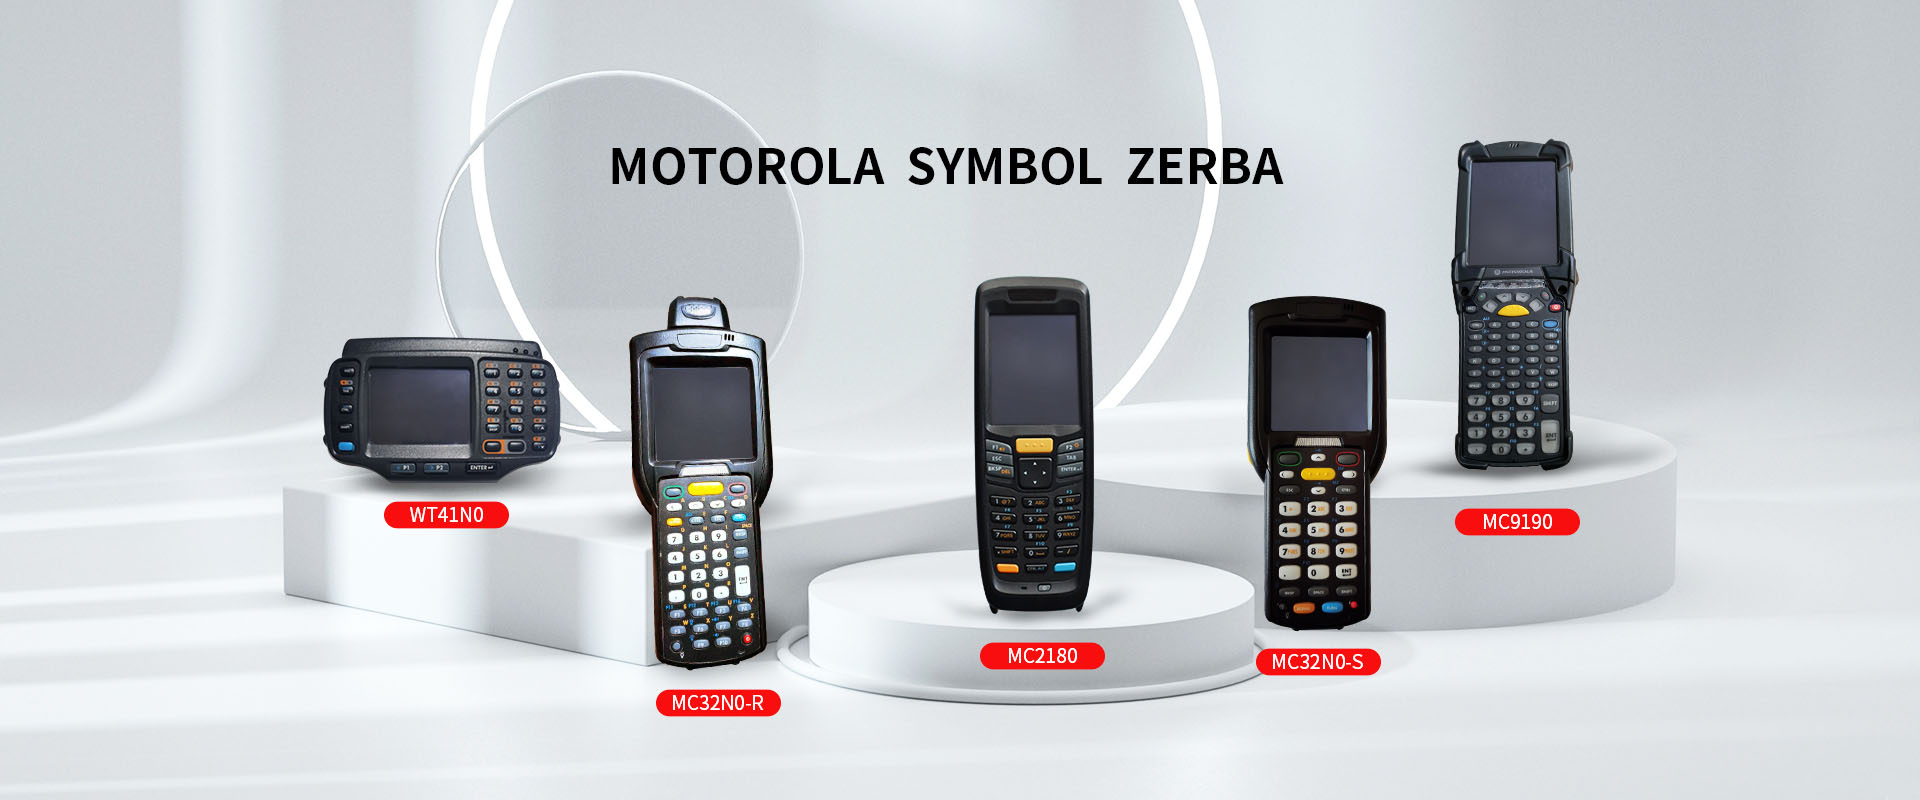 Motorola Symbol Zerba